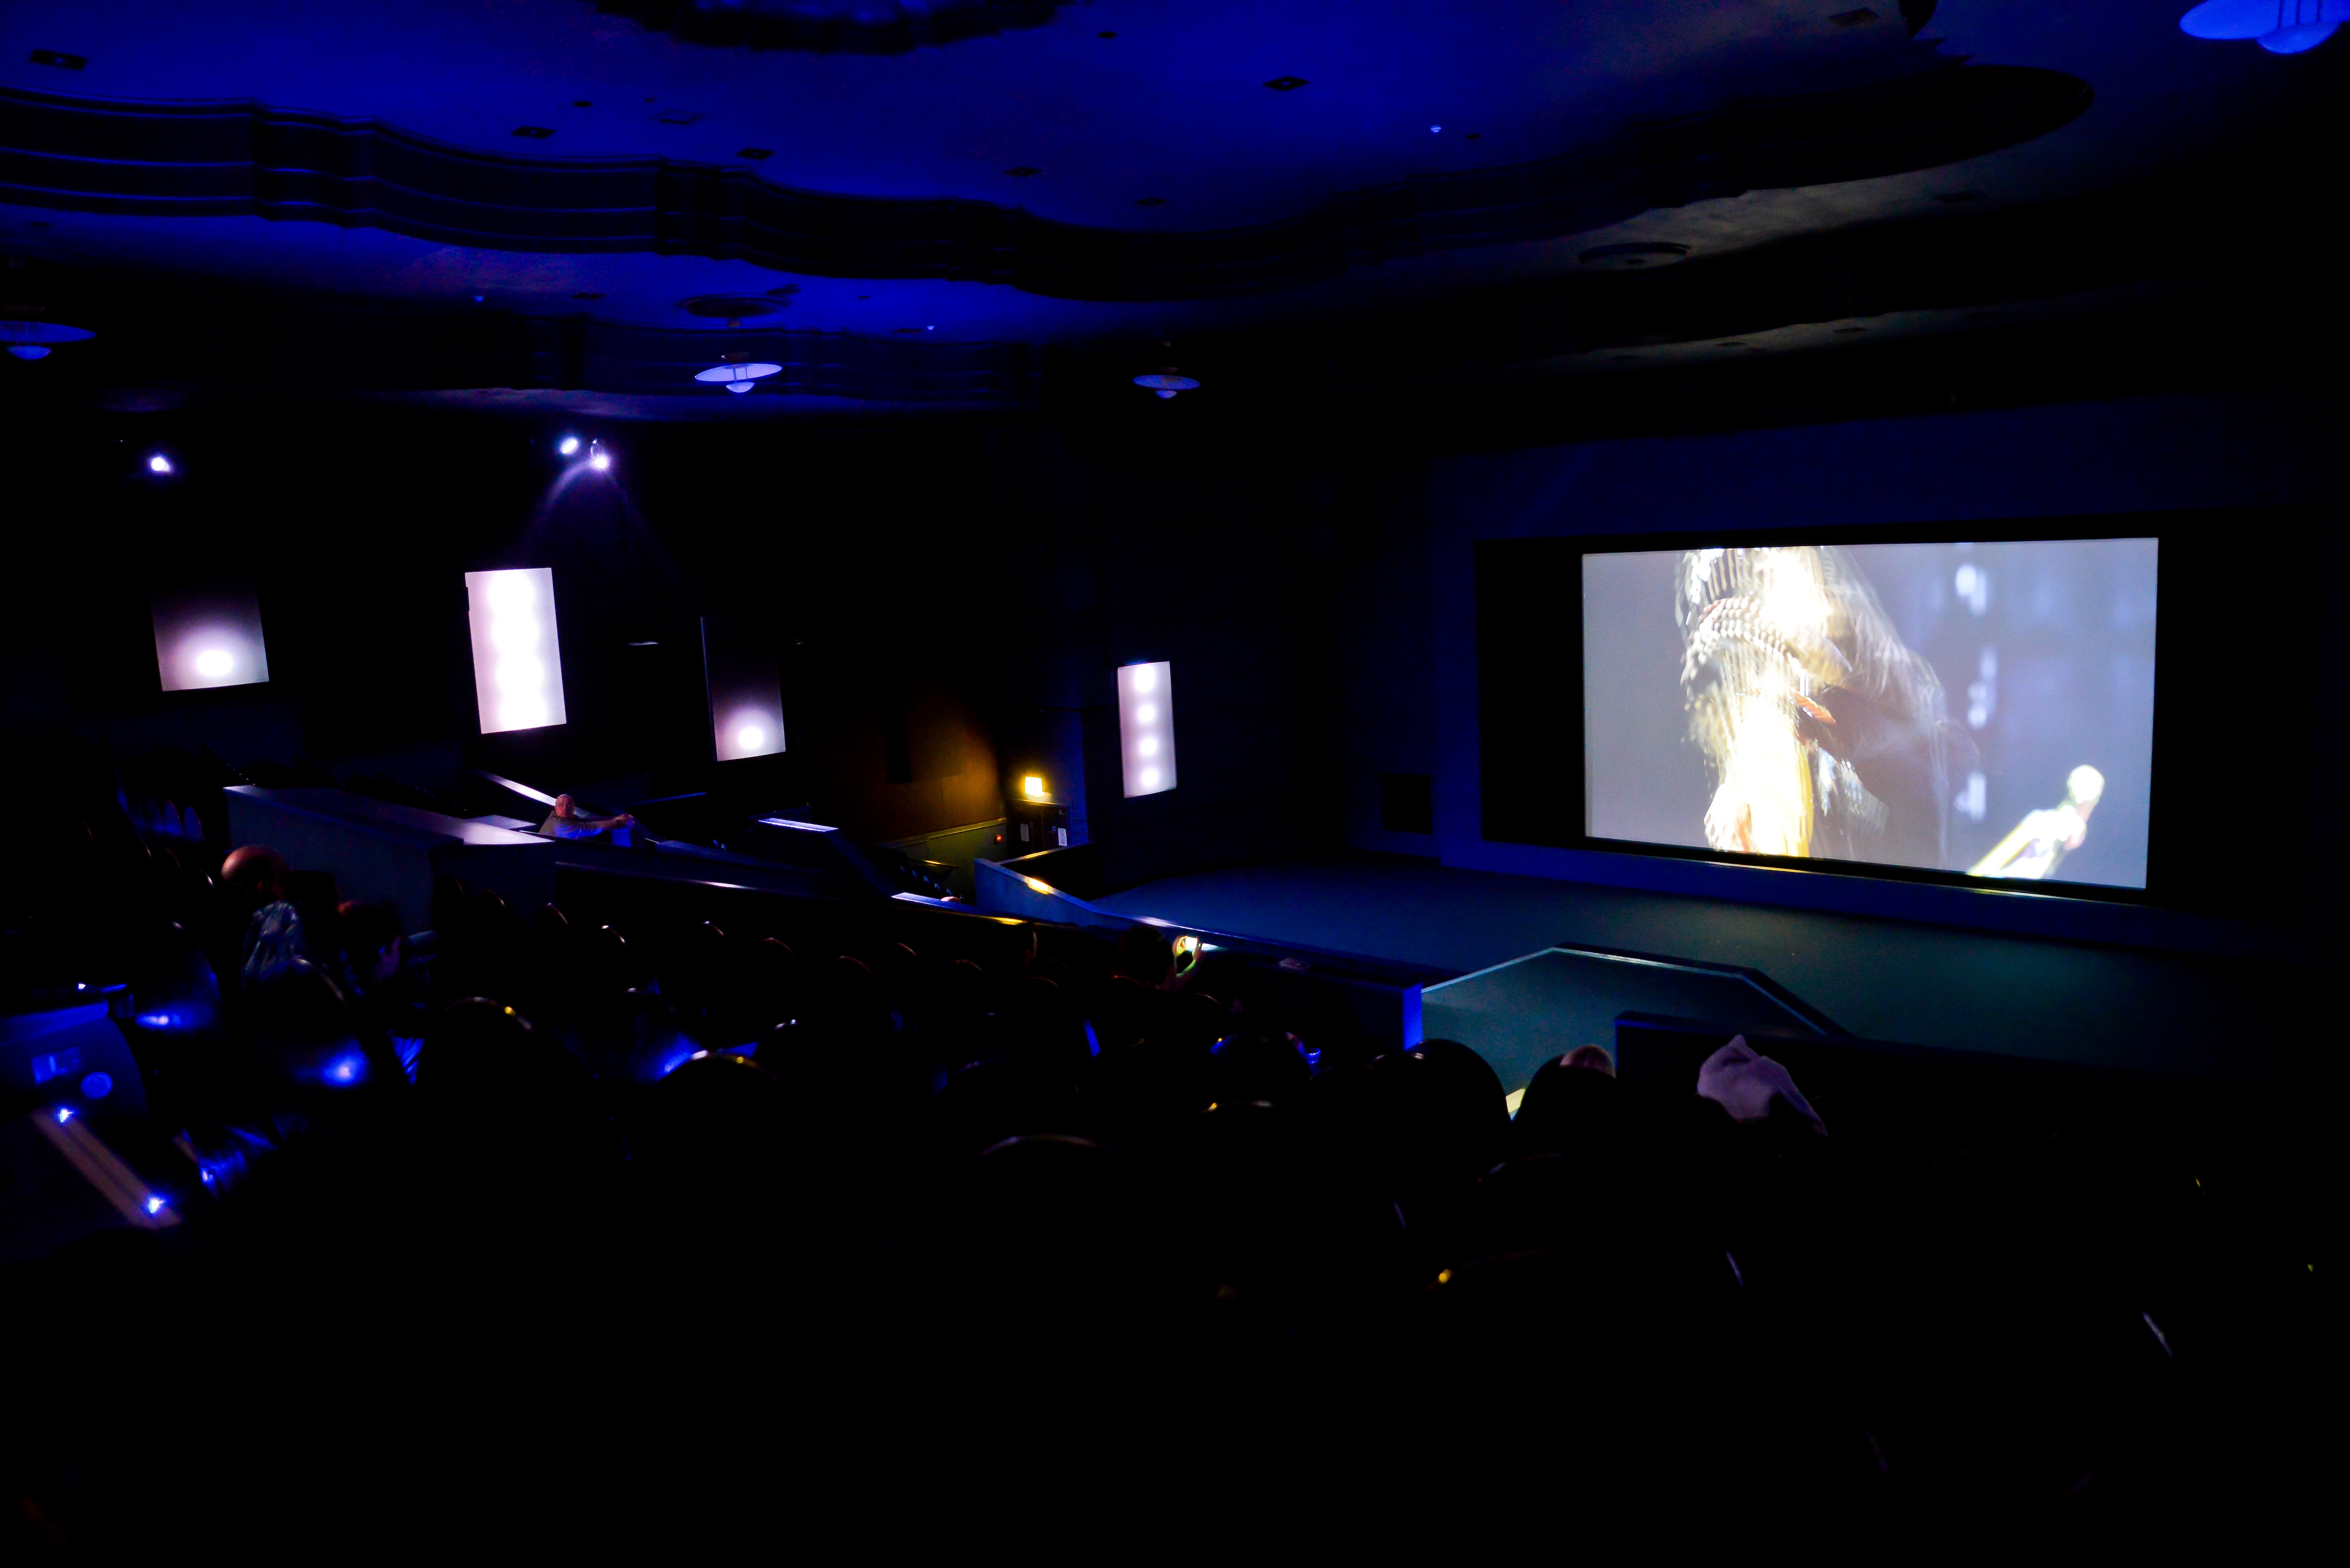 Imagine Dragons concert film thrills London audience at immersive ...